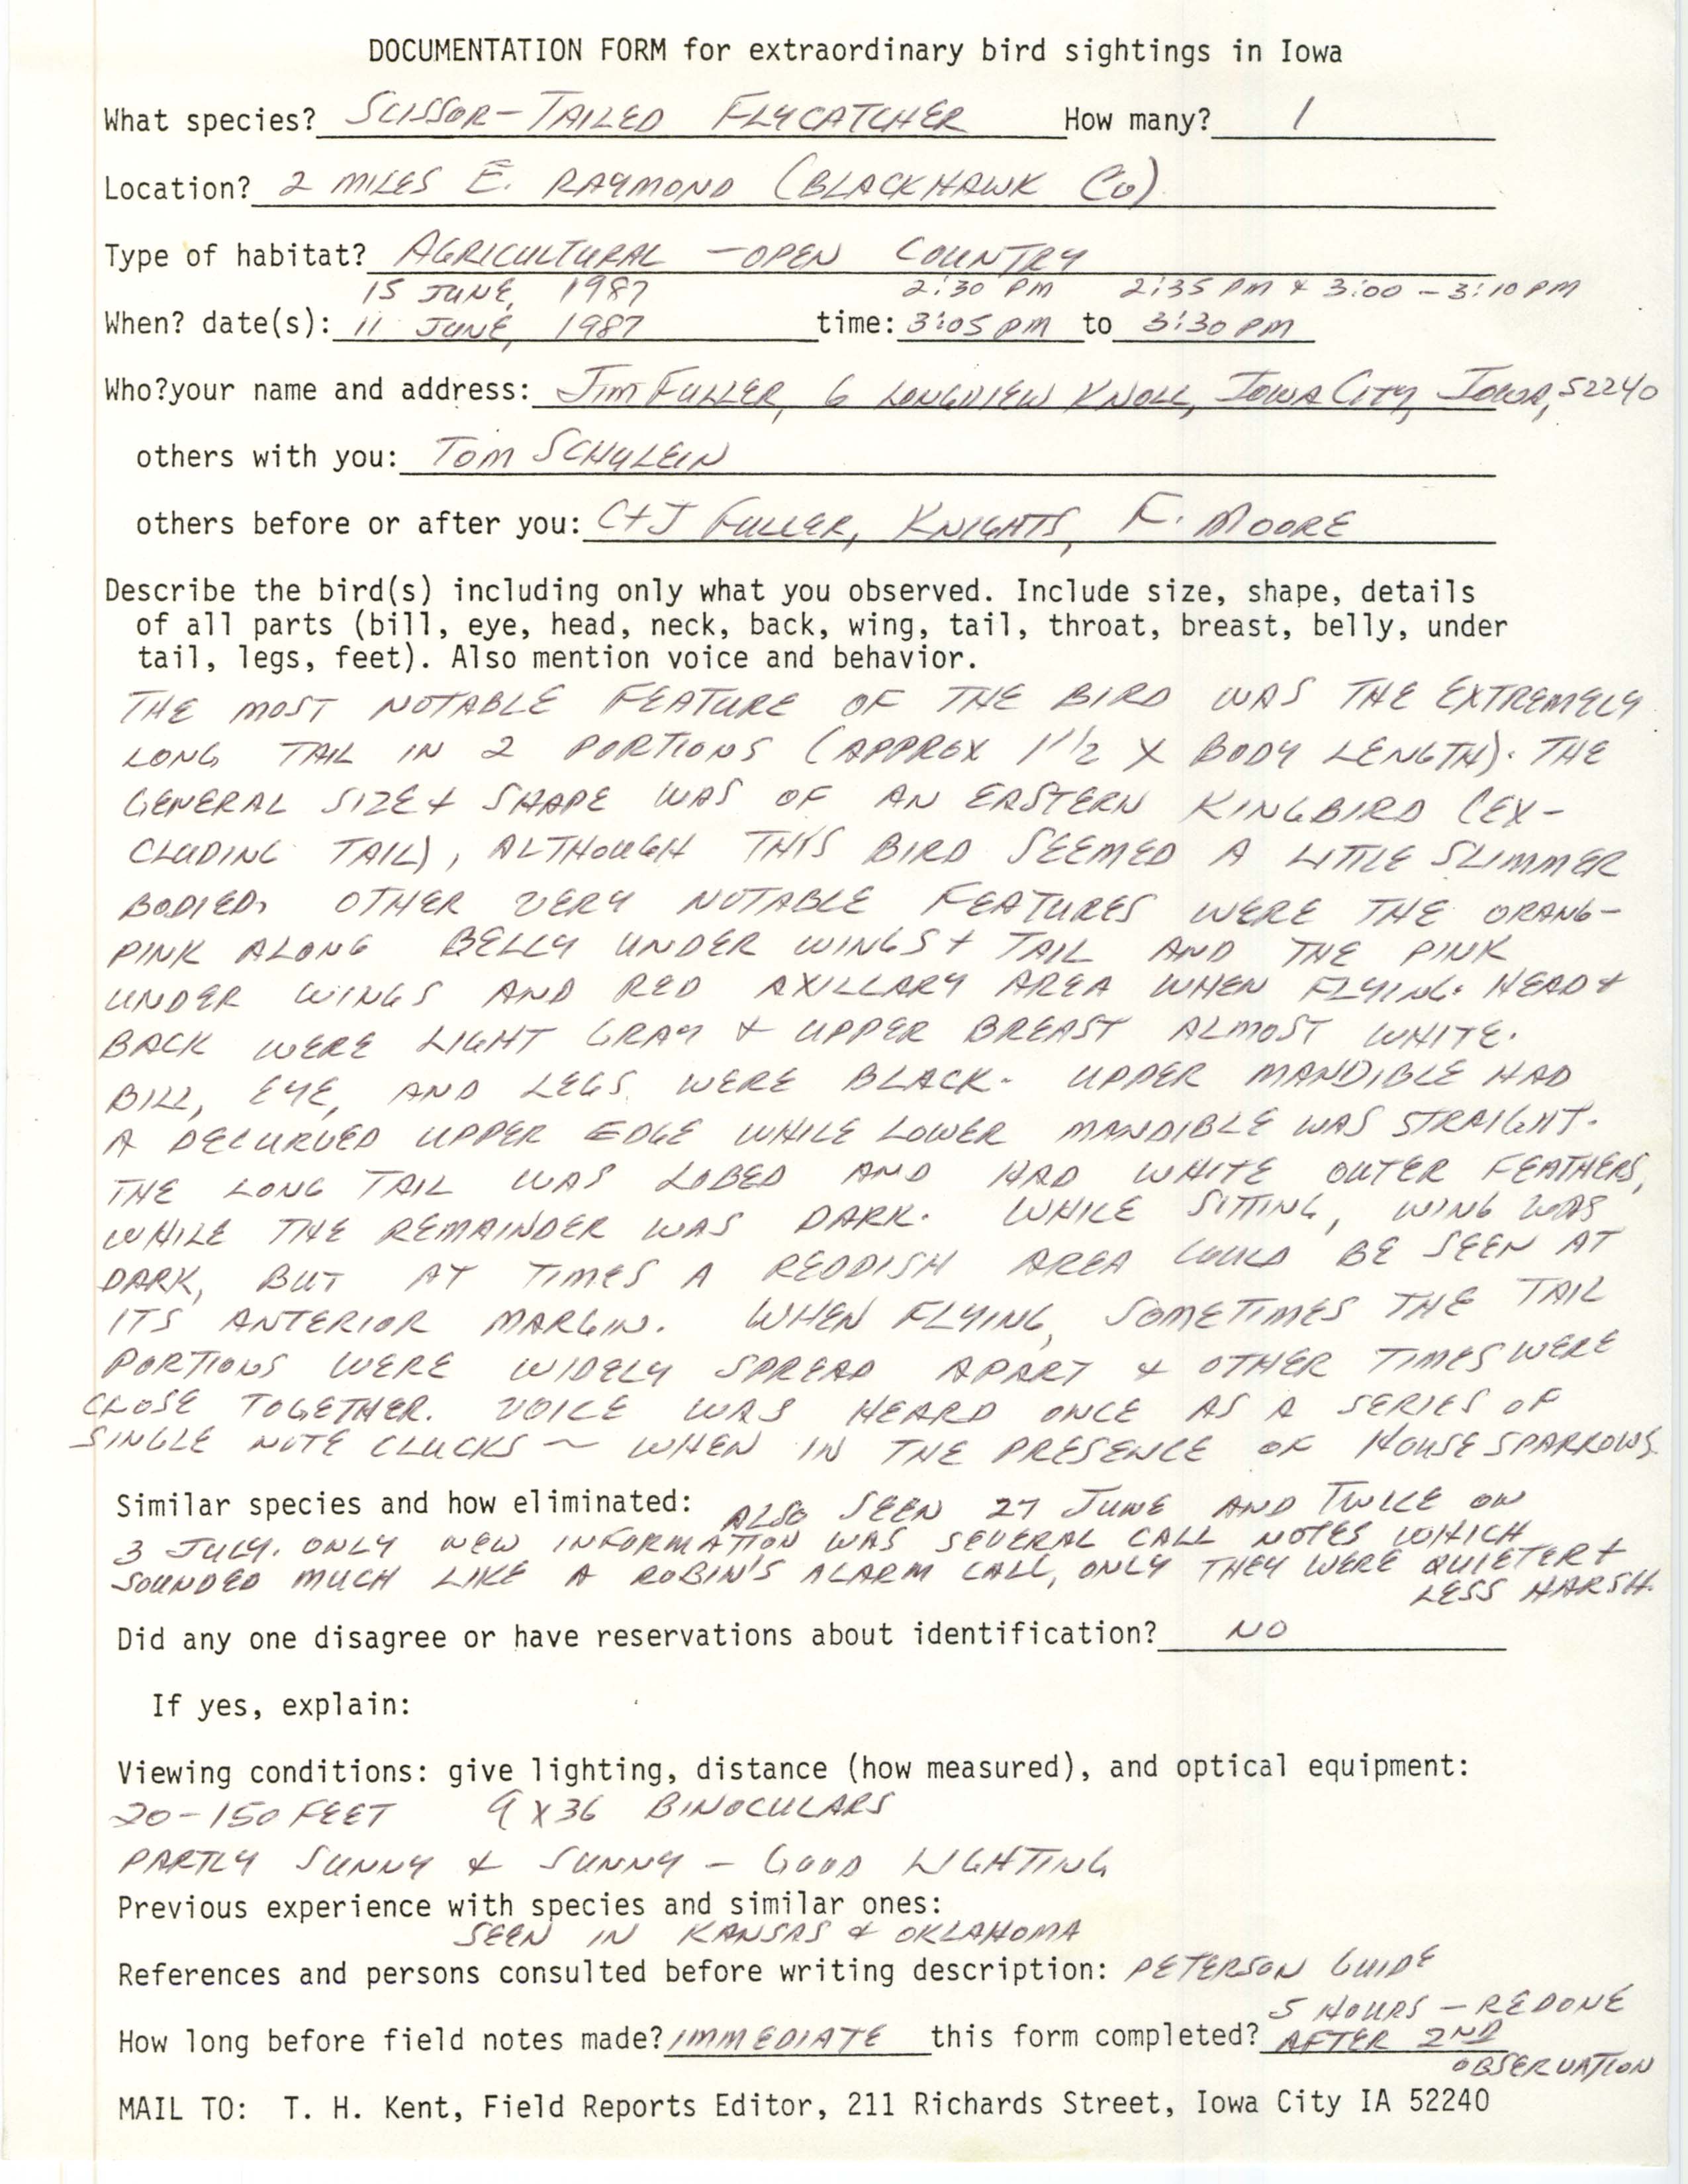 Rare bird documentation form for Scissor-tailed Flycatcher east of Raymond in 1987